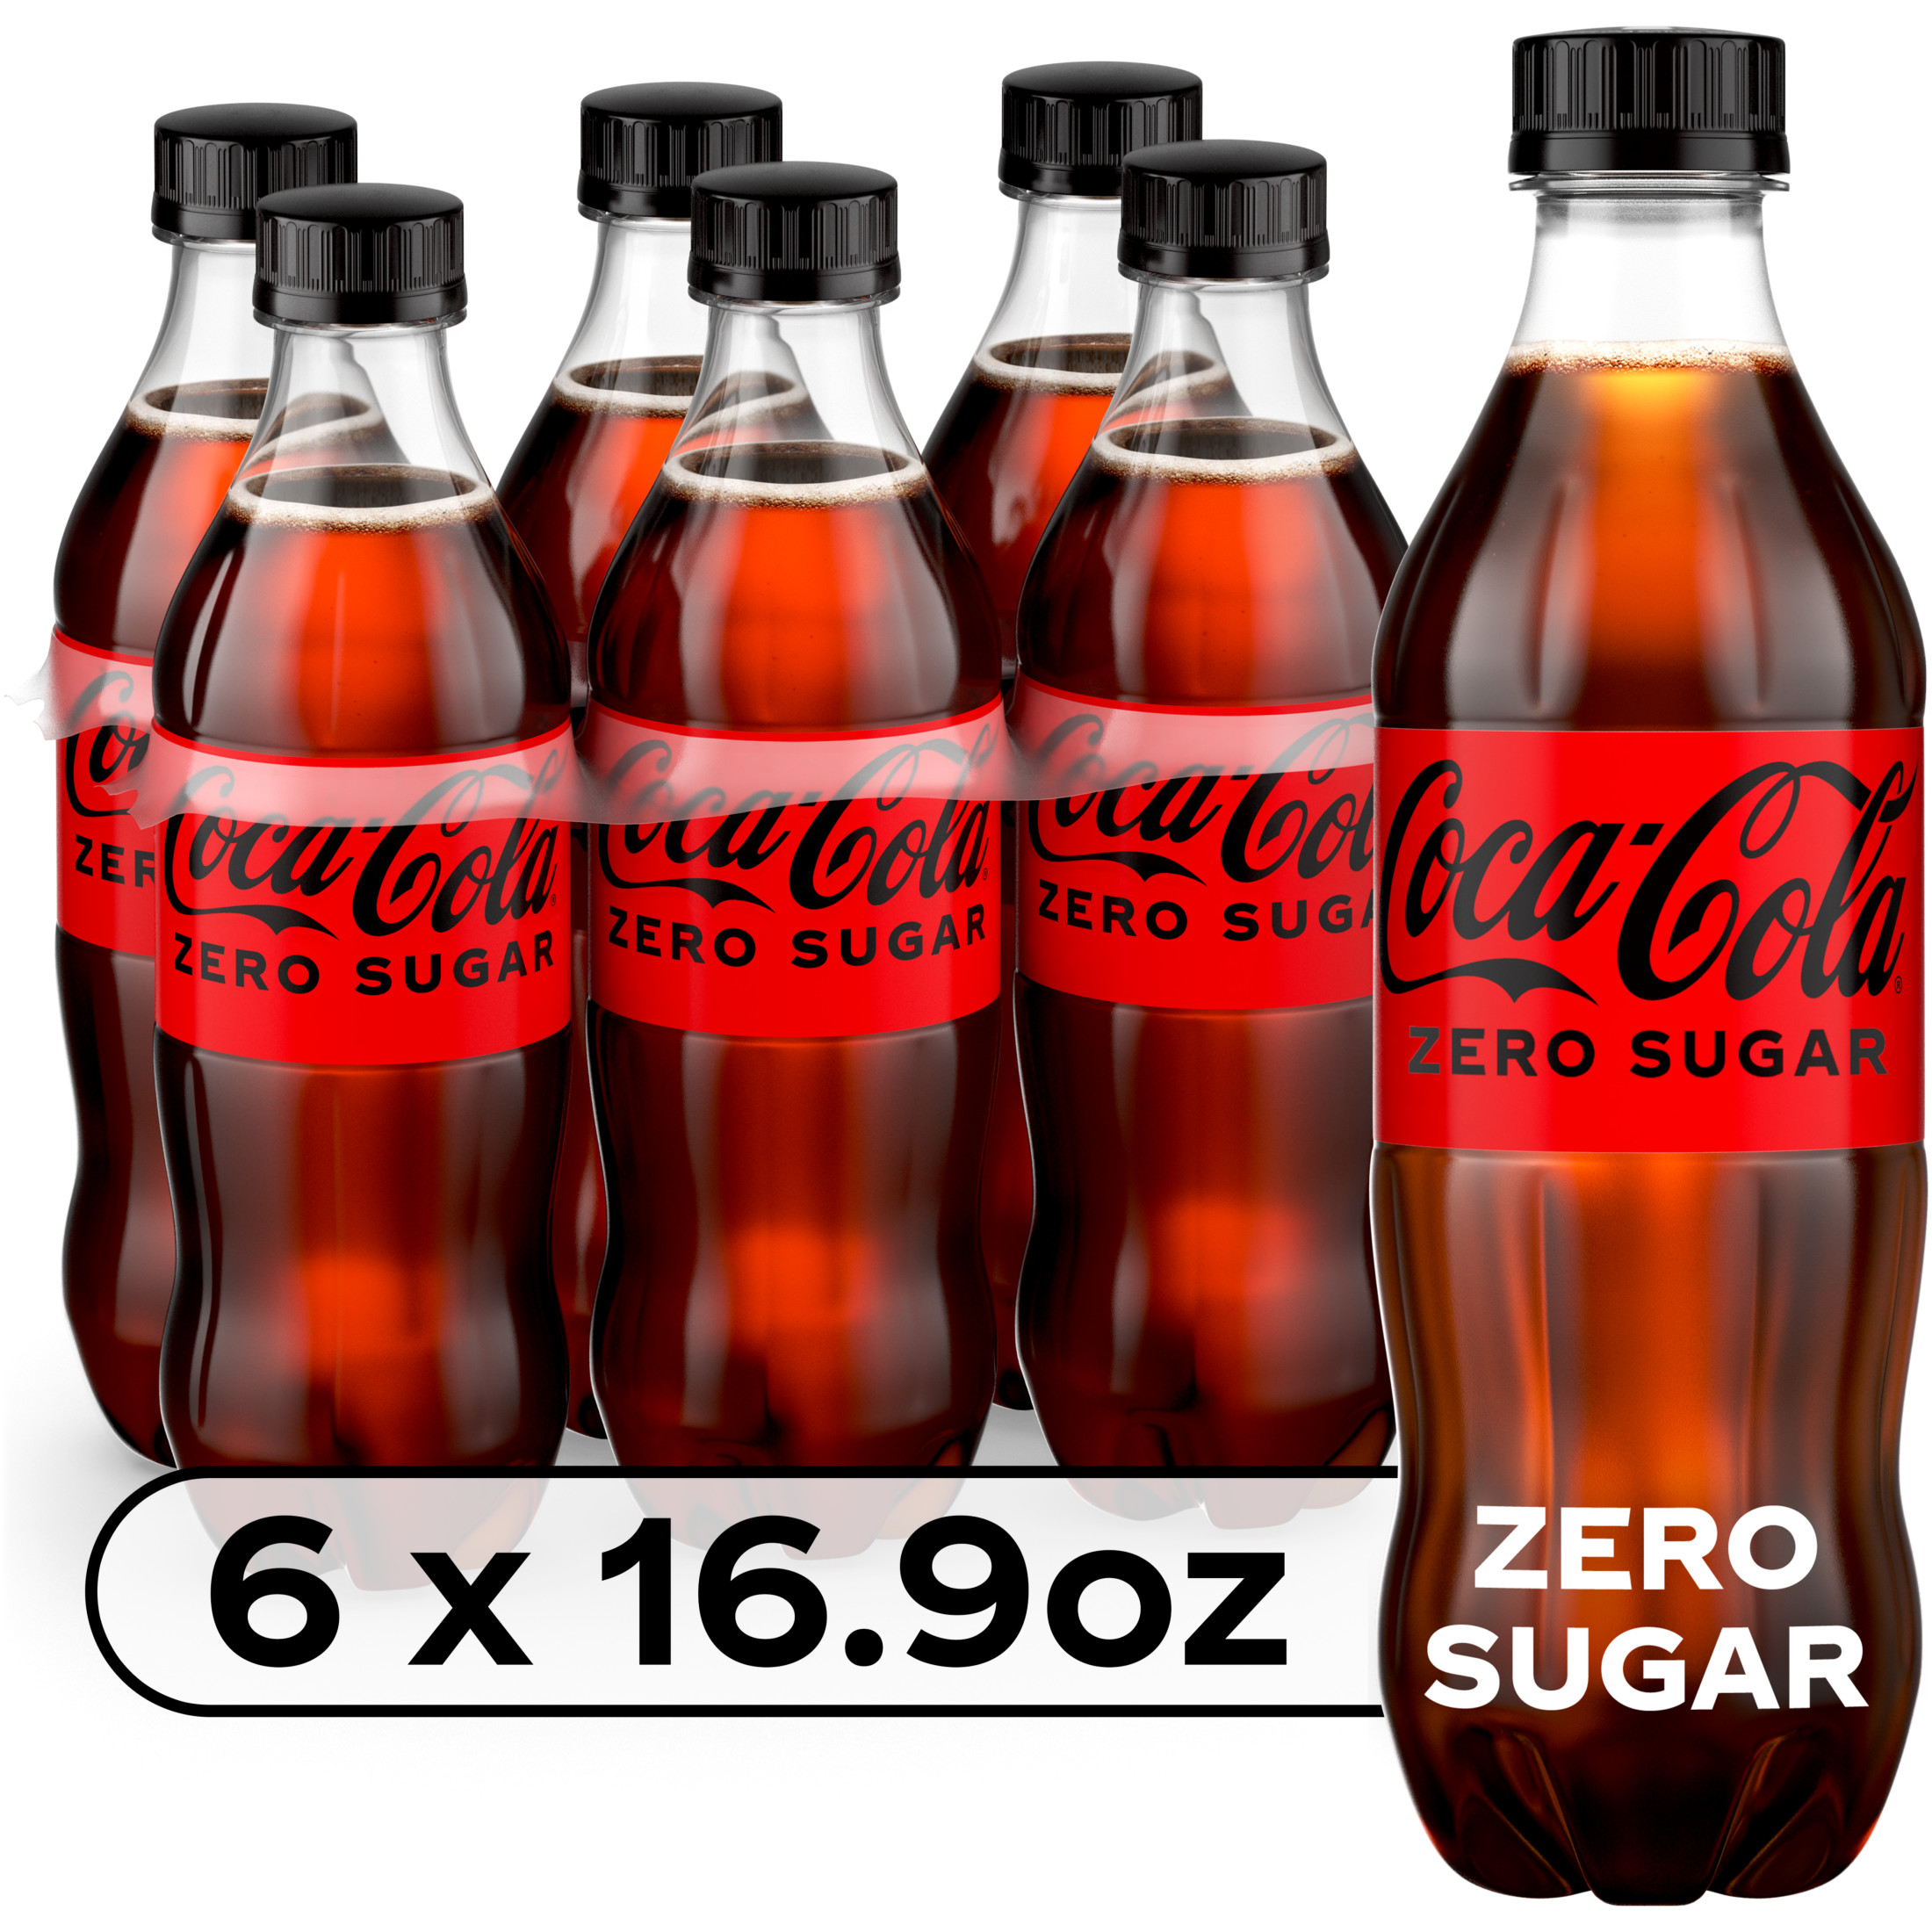 Coca-Cola Zero Sugar Sugar-Free Soda Pop, 16.9 fl oz Bottles, 6 Pack - image 1 of 8